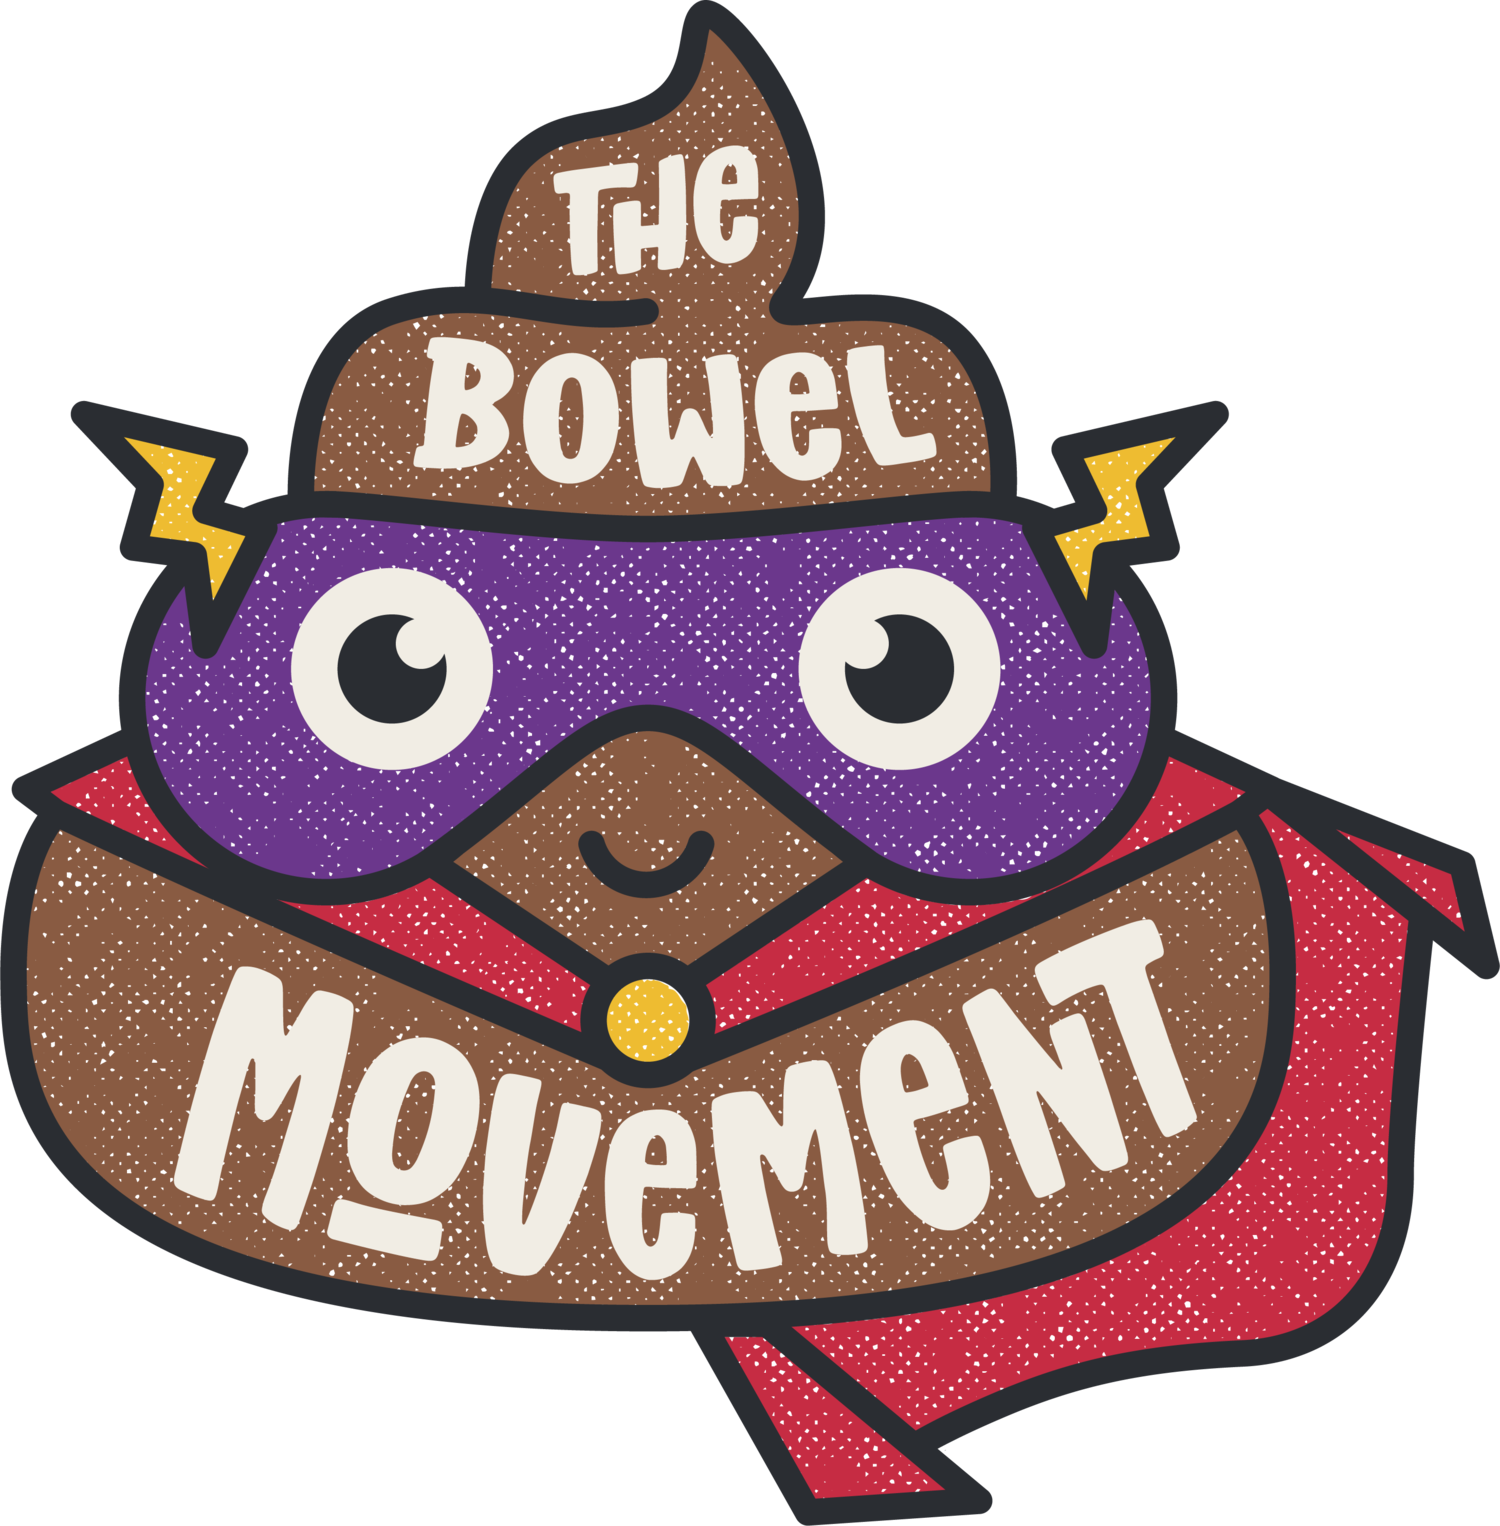 The Bowel Movement